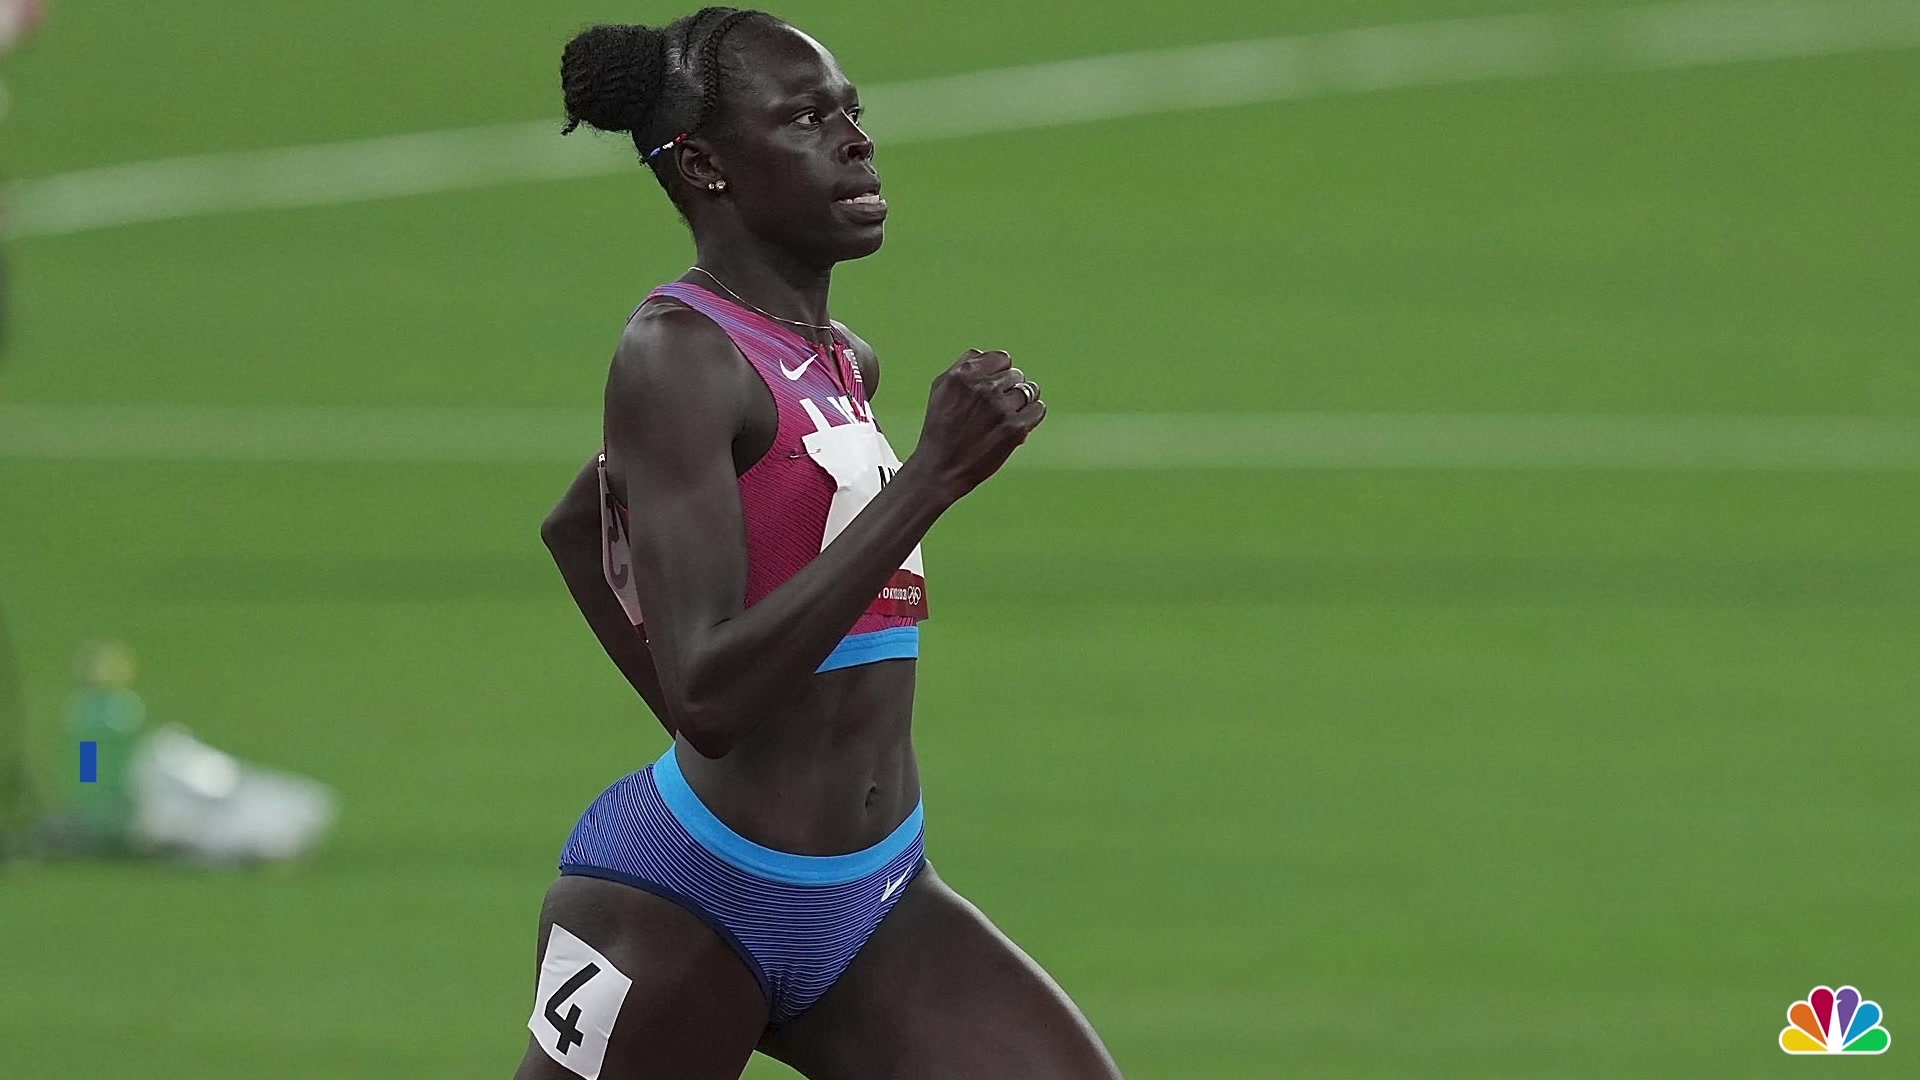 Athing Mu Wins Gold in Women's 800m Final at Tokyo Olympics – NBC10  Philadelphia